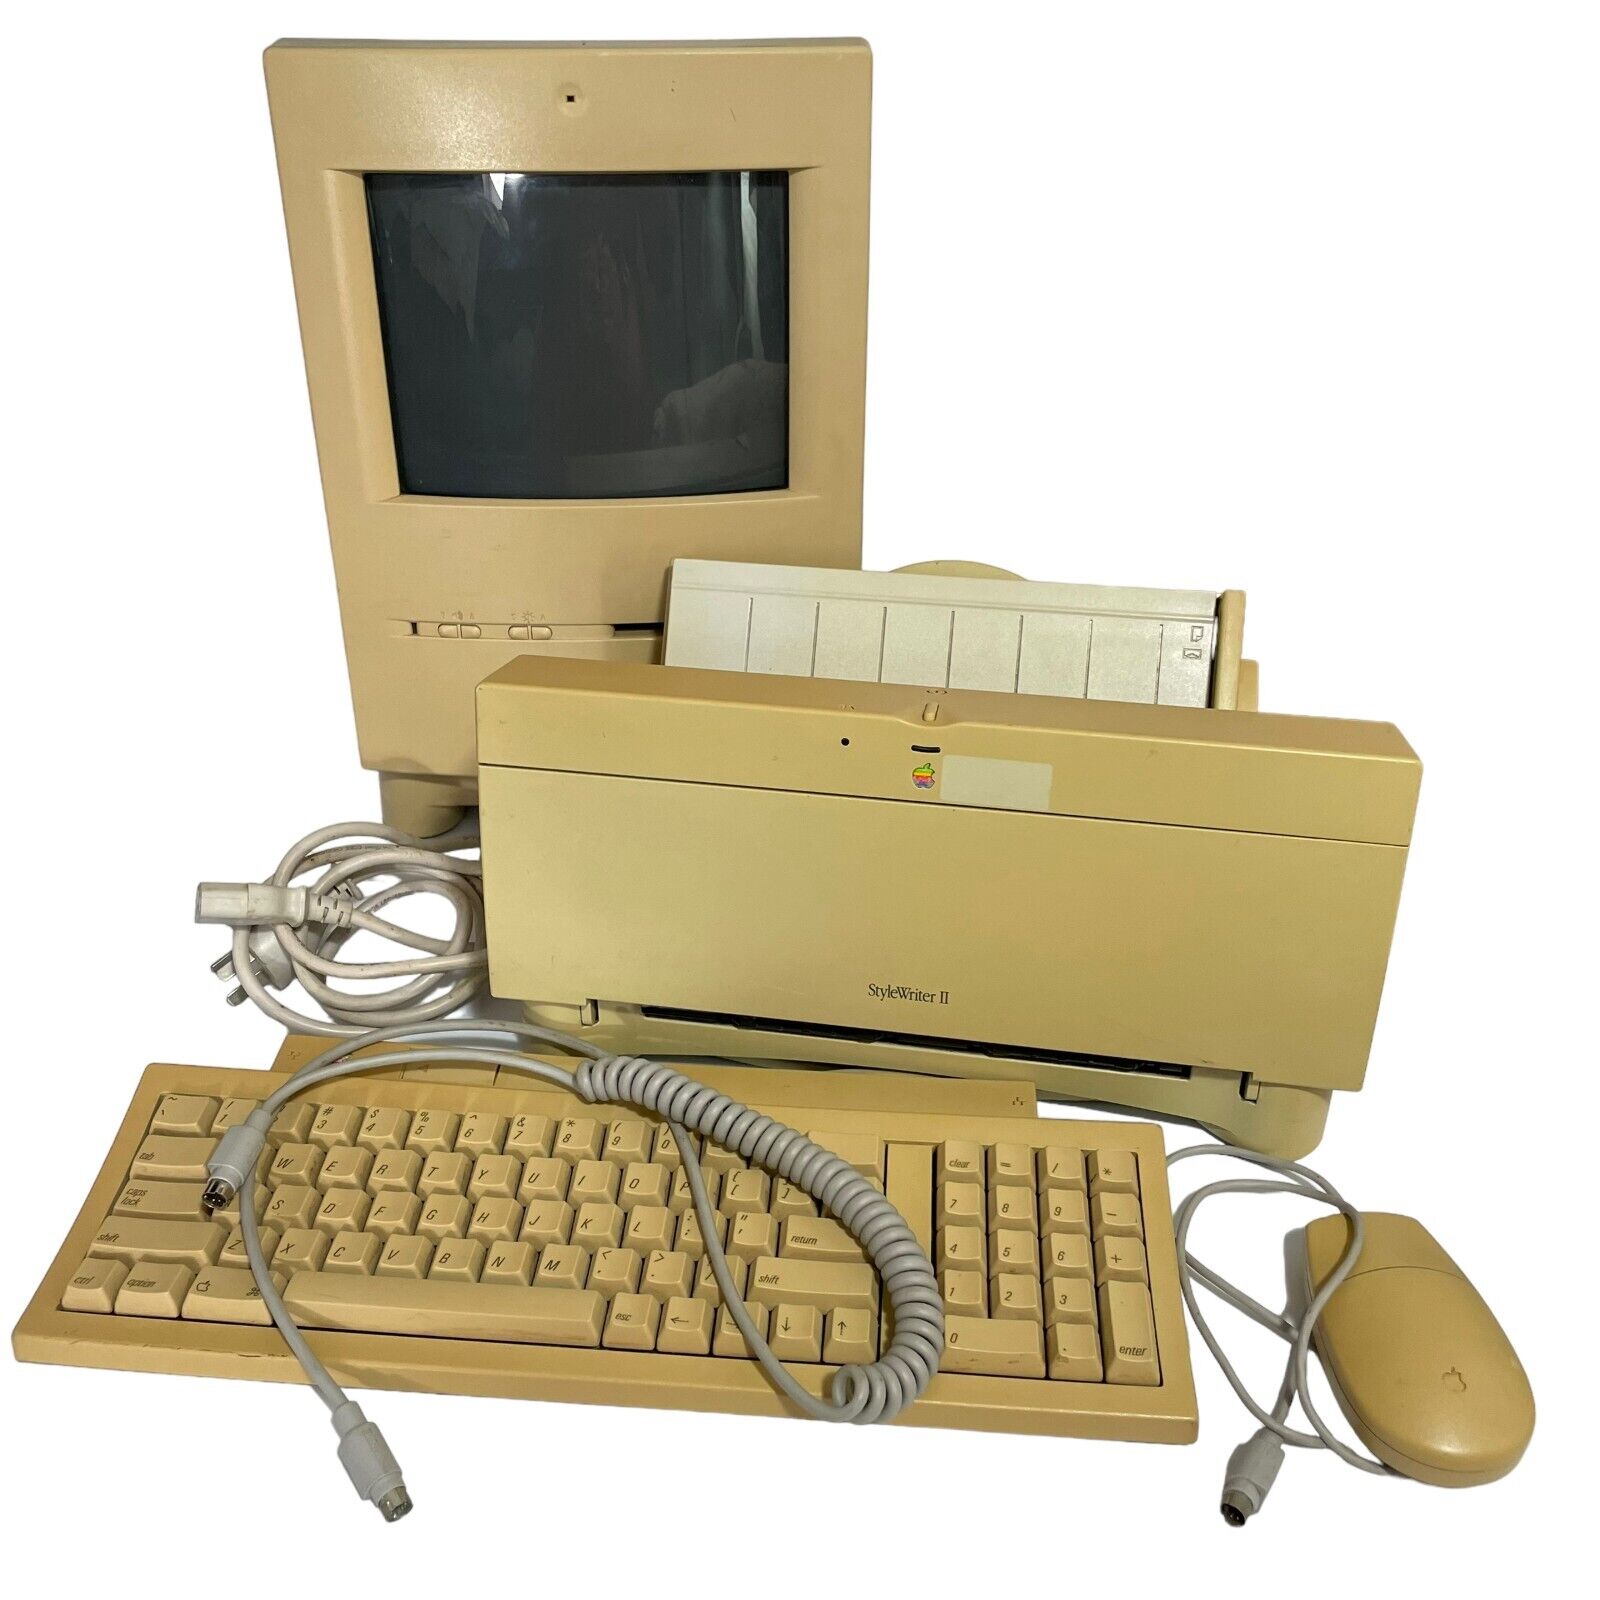 Apple Macintosh M1600 1993 Colour Computer Keyboard Printer Cords Not Working